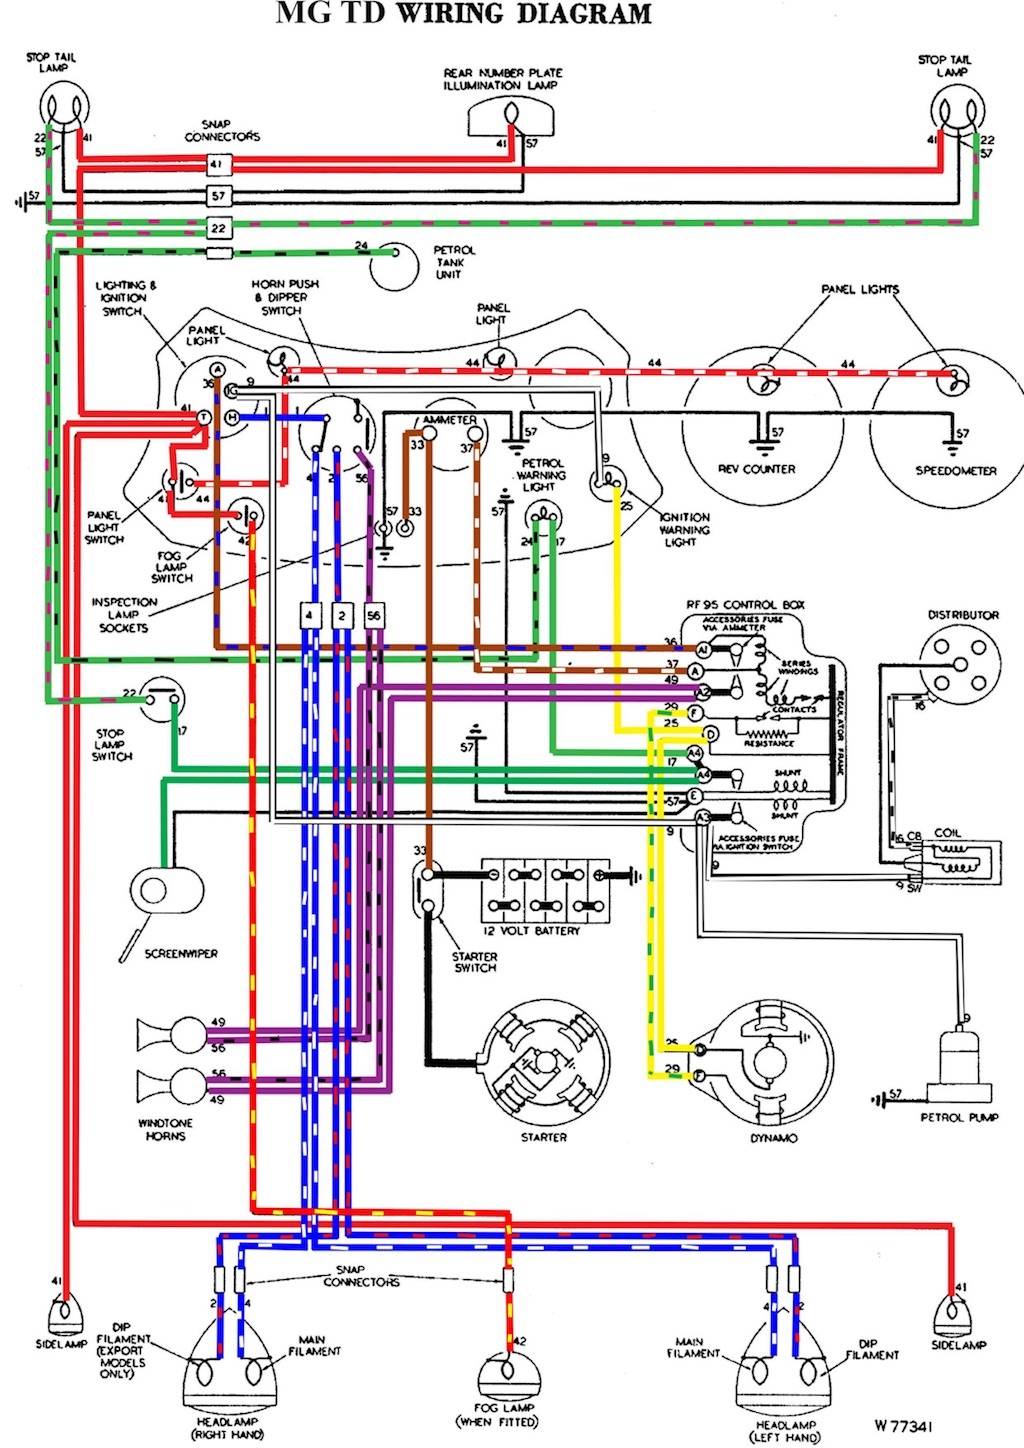 mg-td-wiring-diagram-small.jpg